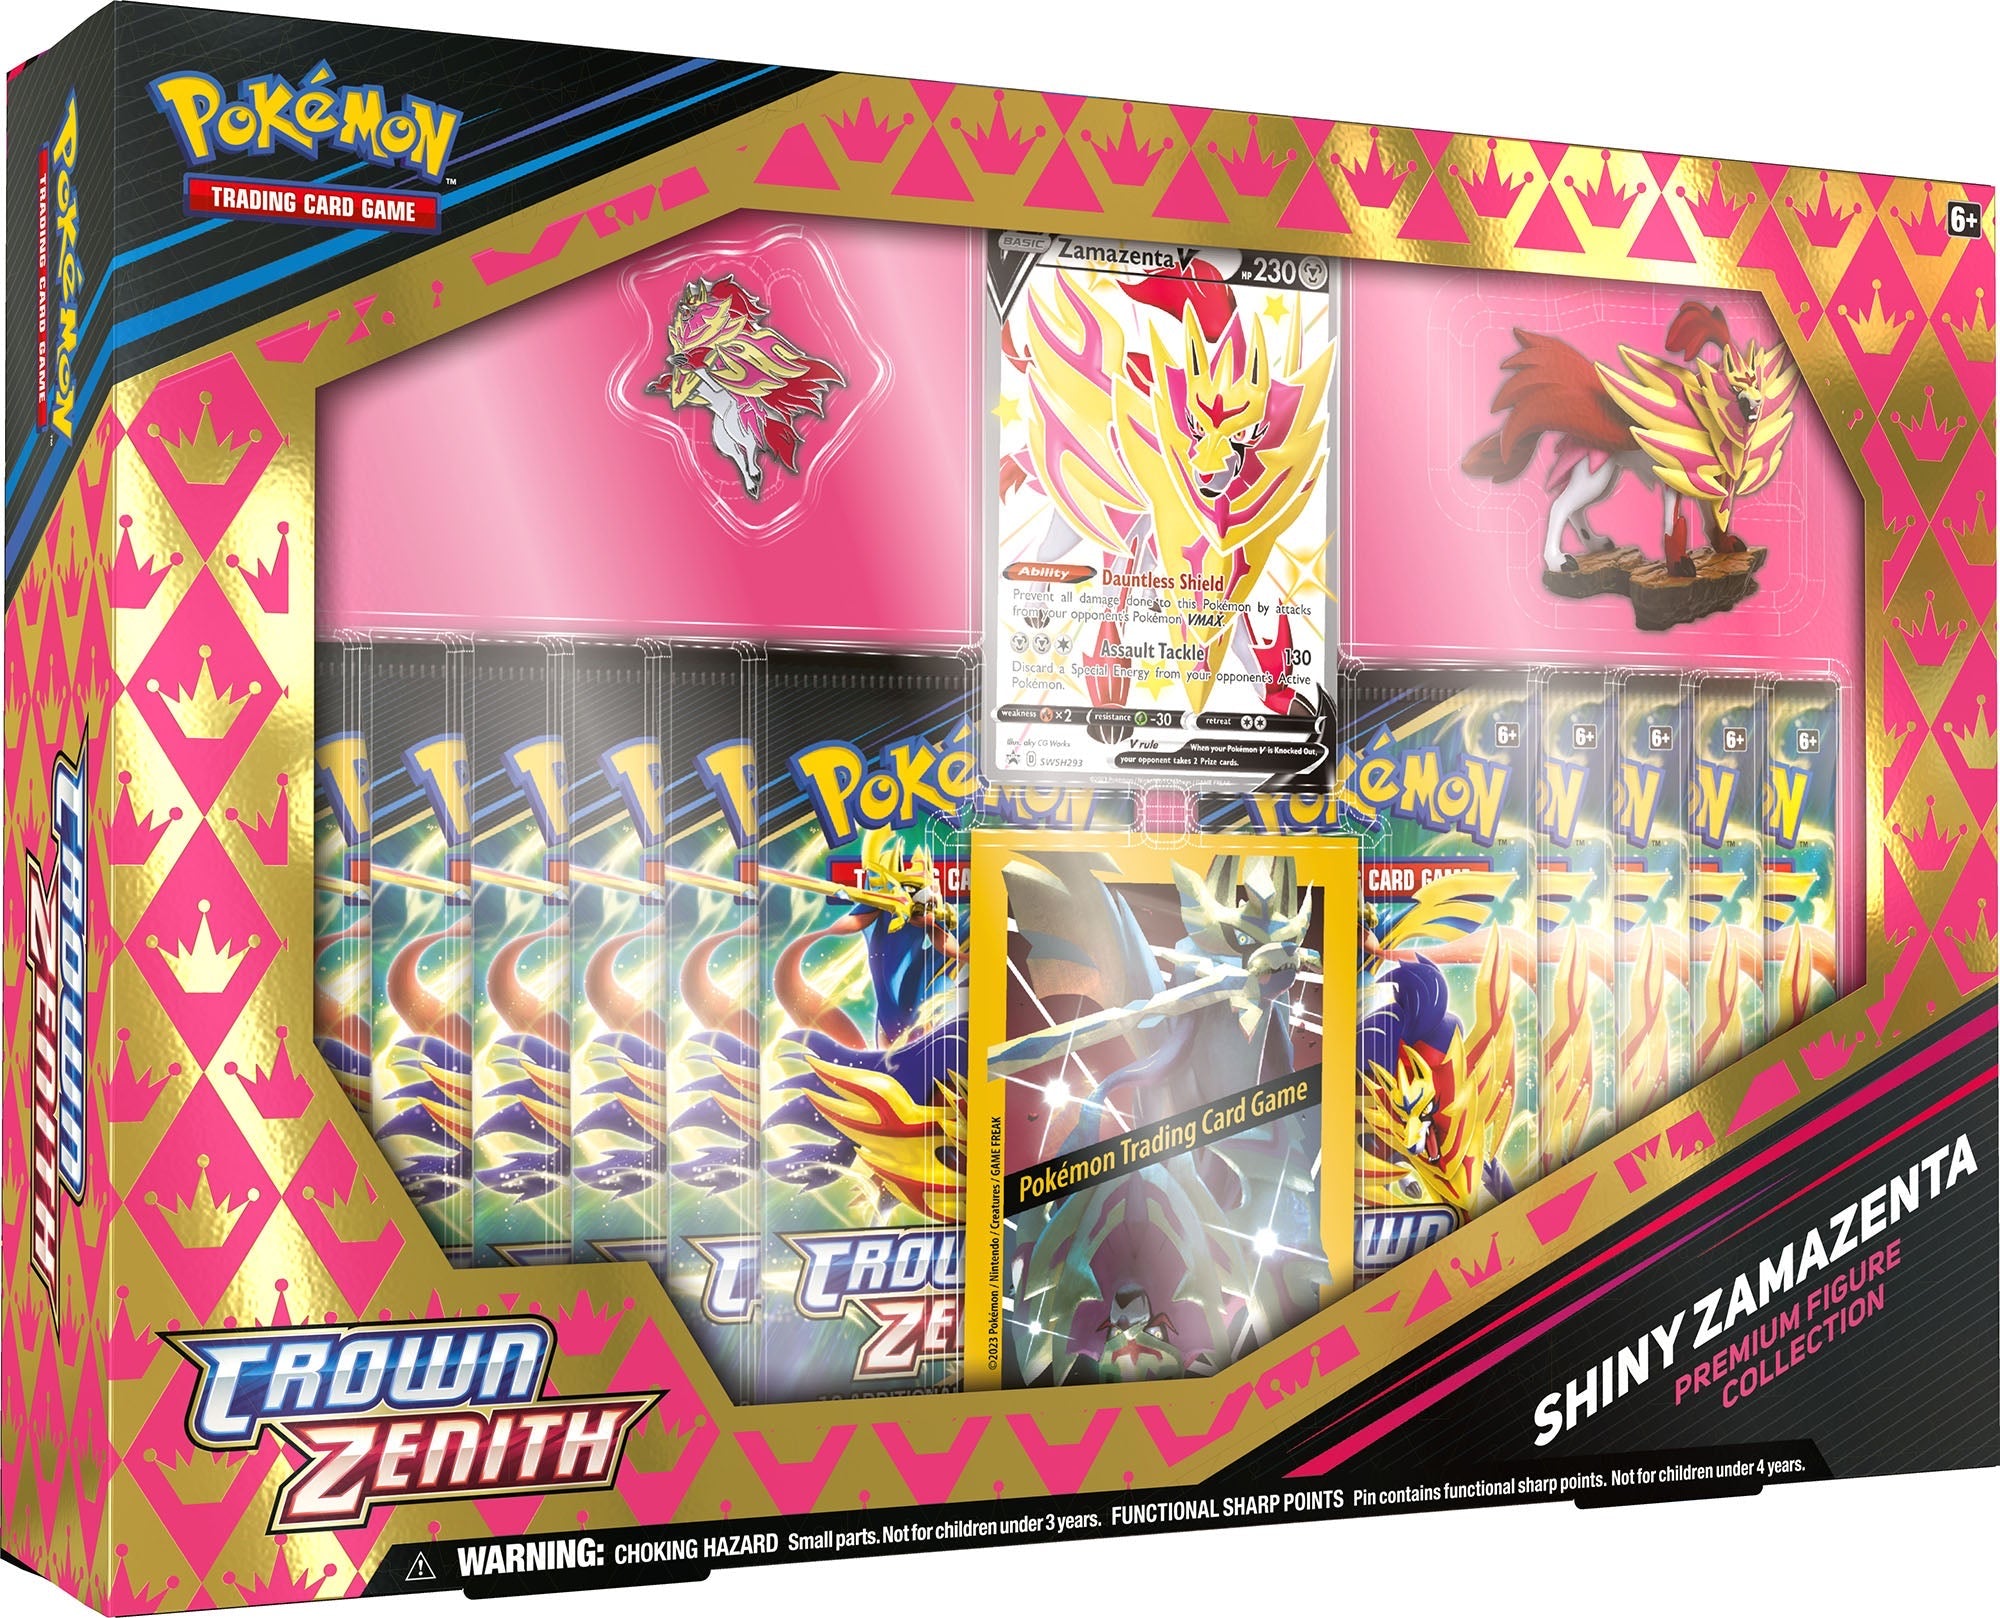 Pokémon Crown Zenith Shiny Zamazenta Premium Figure Collection #280-85163